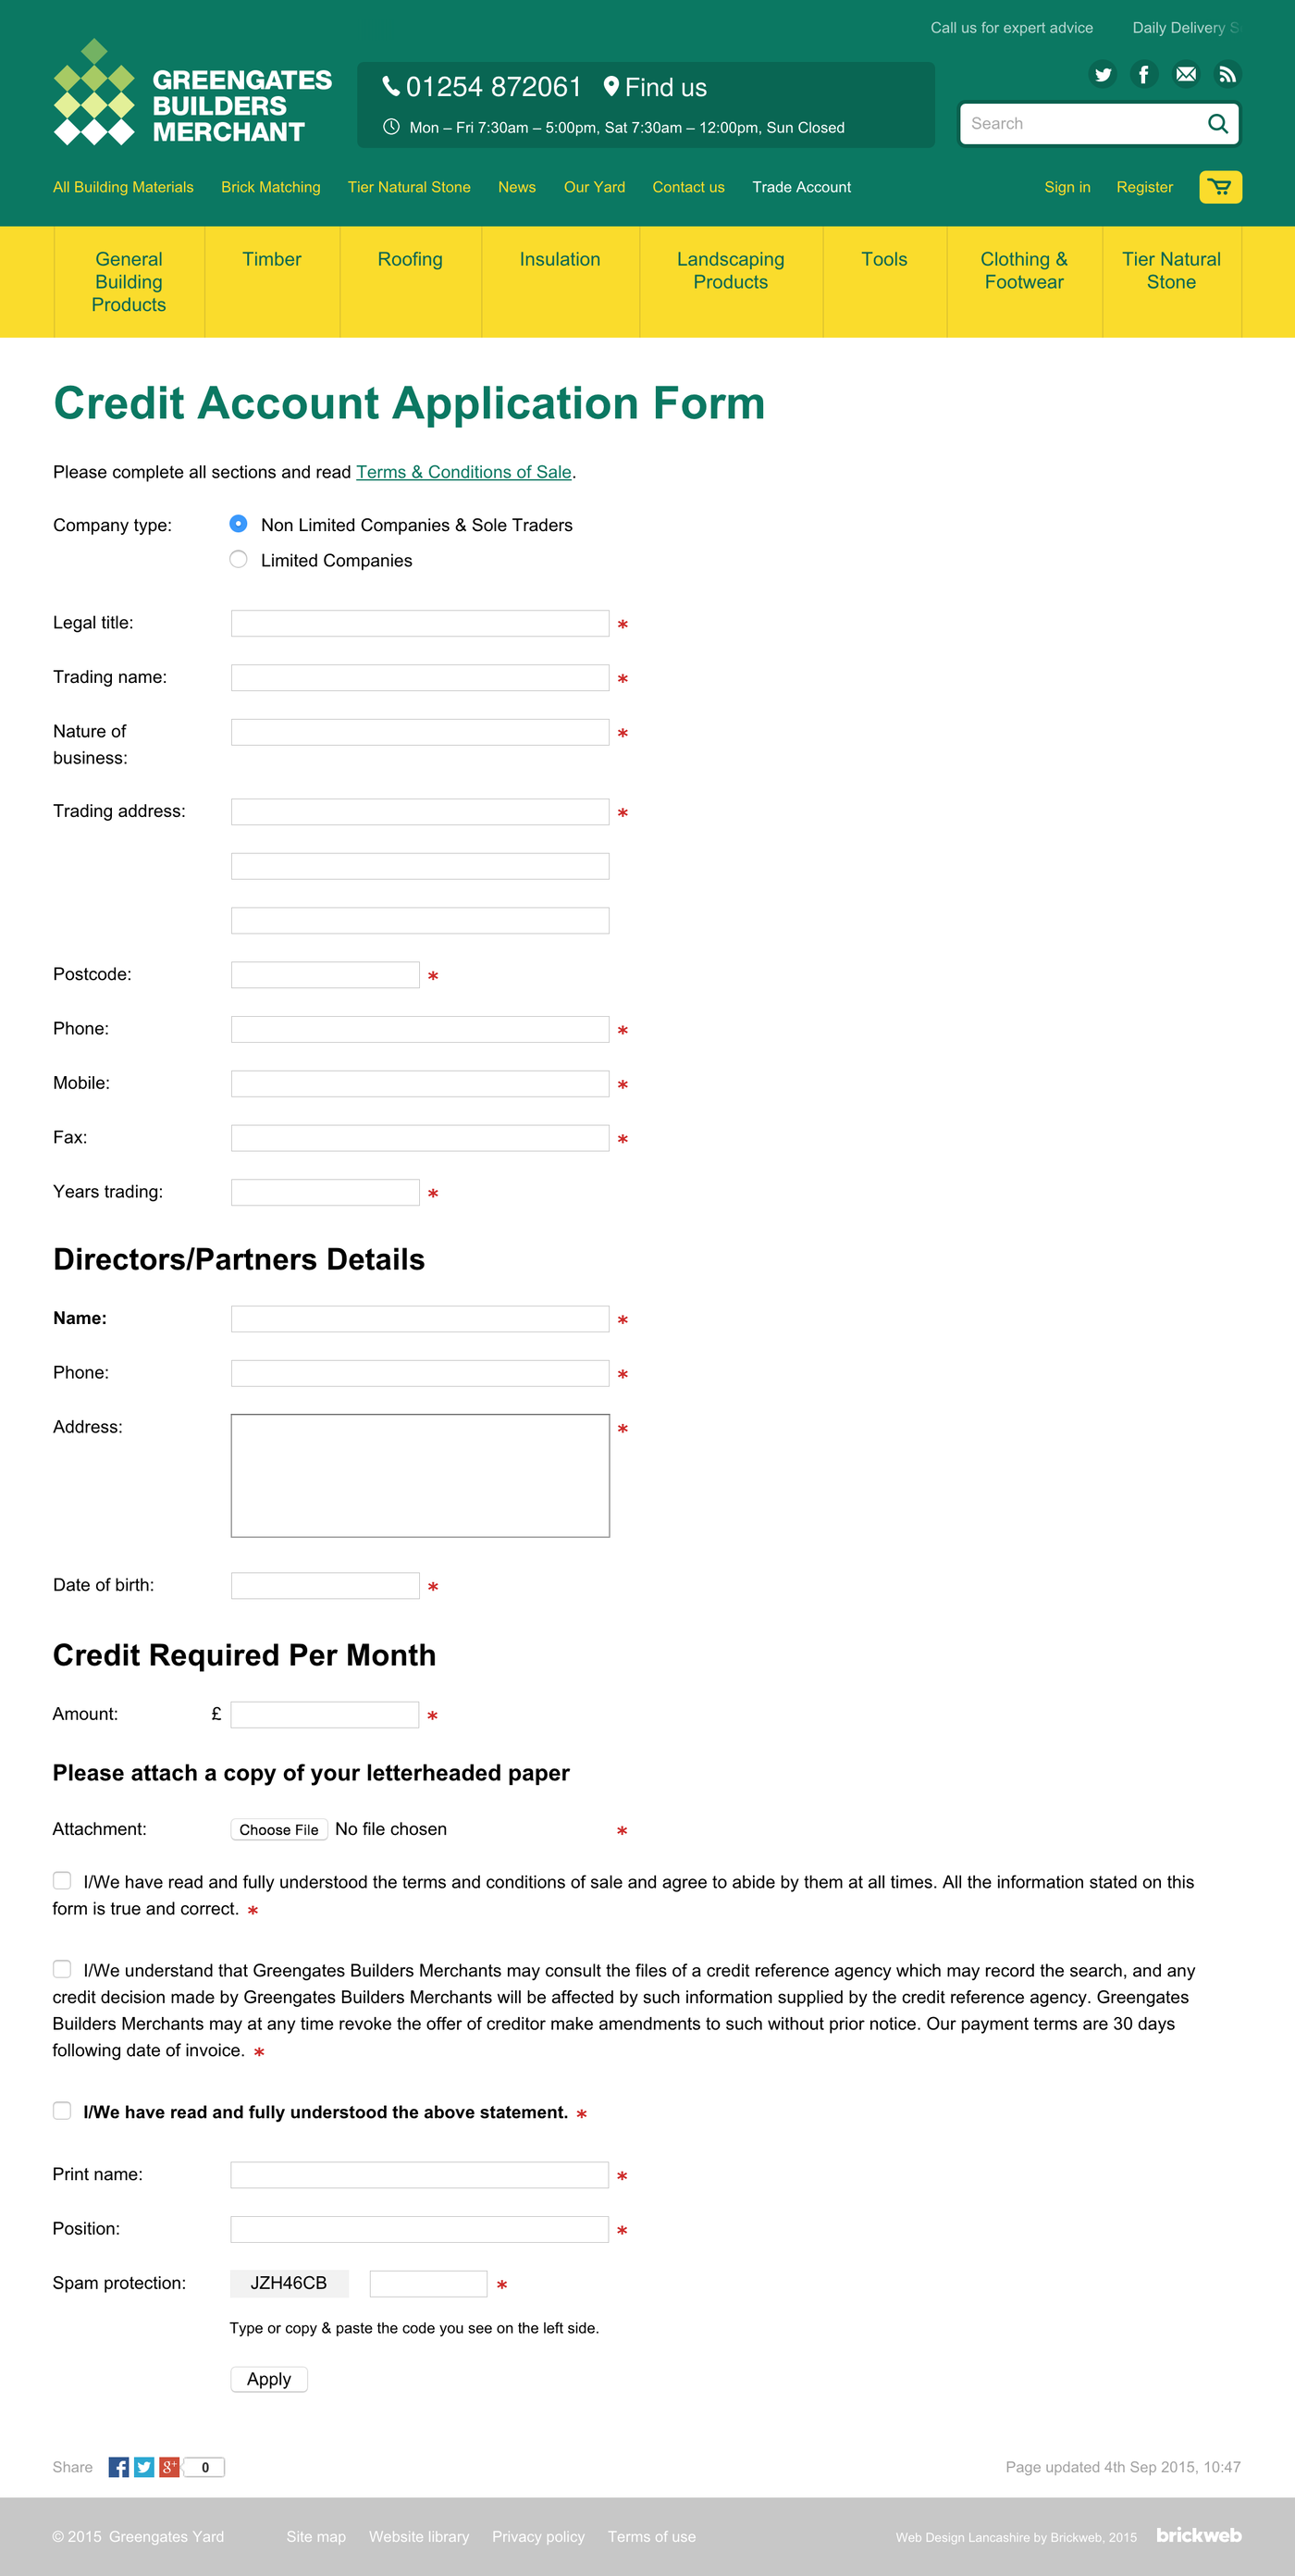 Greengates Builders Merchants (2015) Application Form